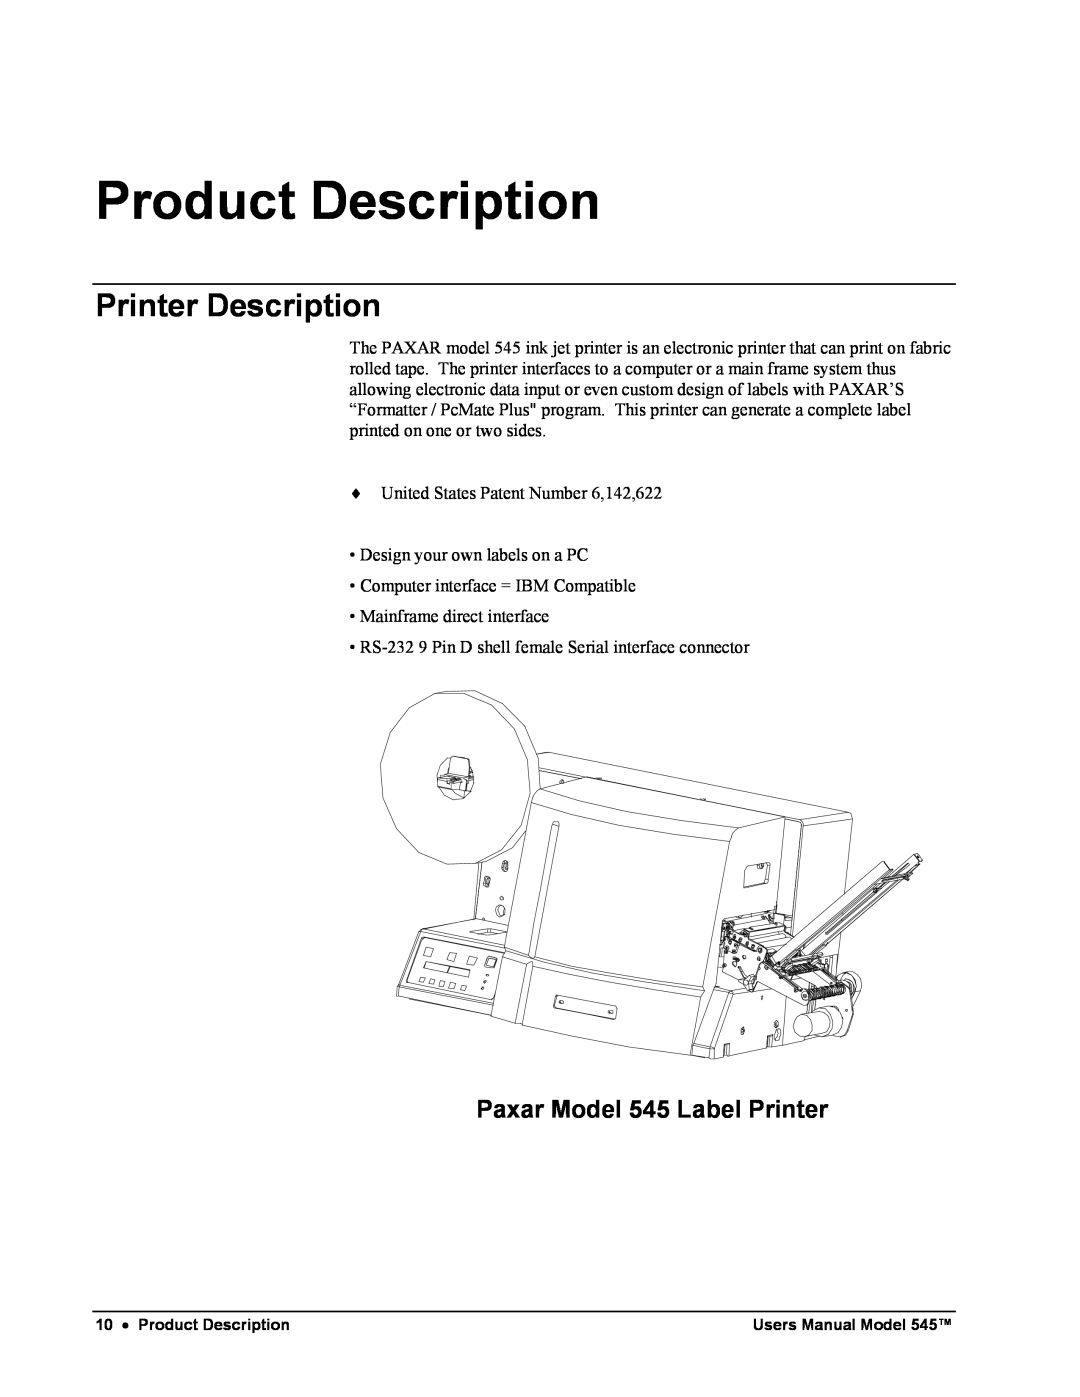 Paxar user manual Product Description, Printer Description, Paxar Model 545 Label Printer 